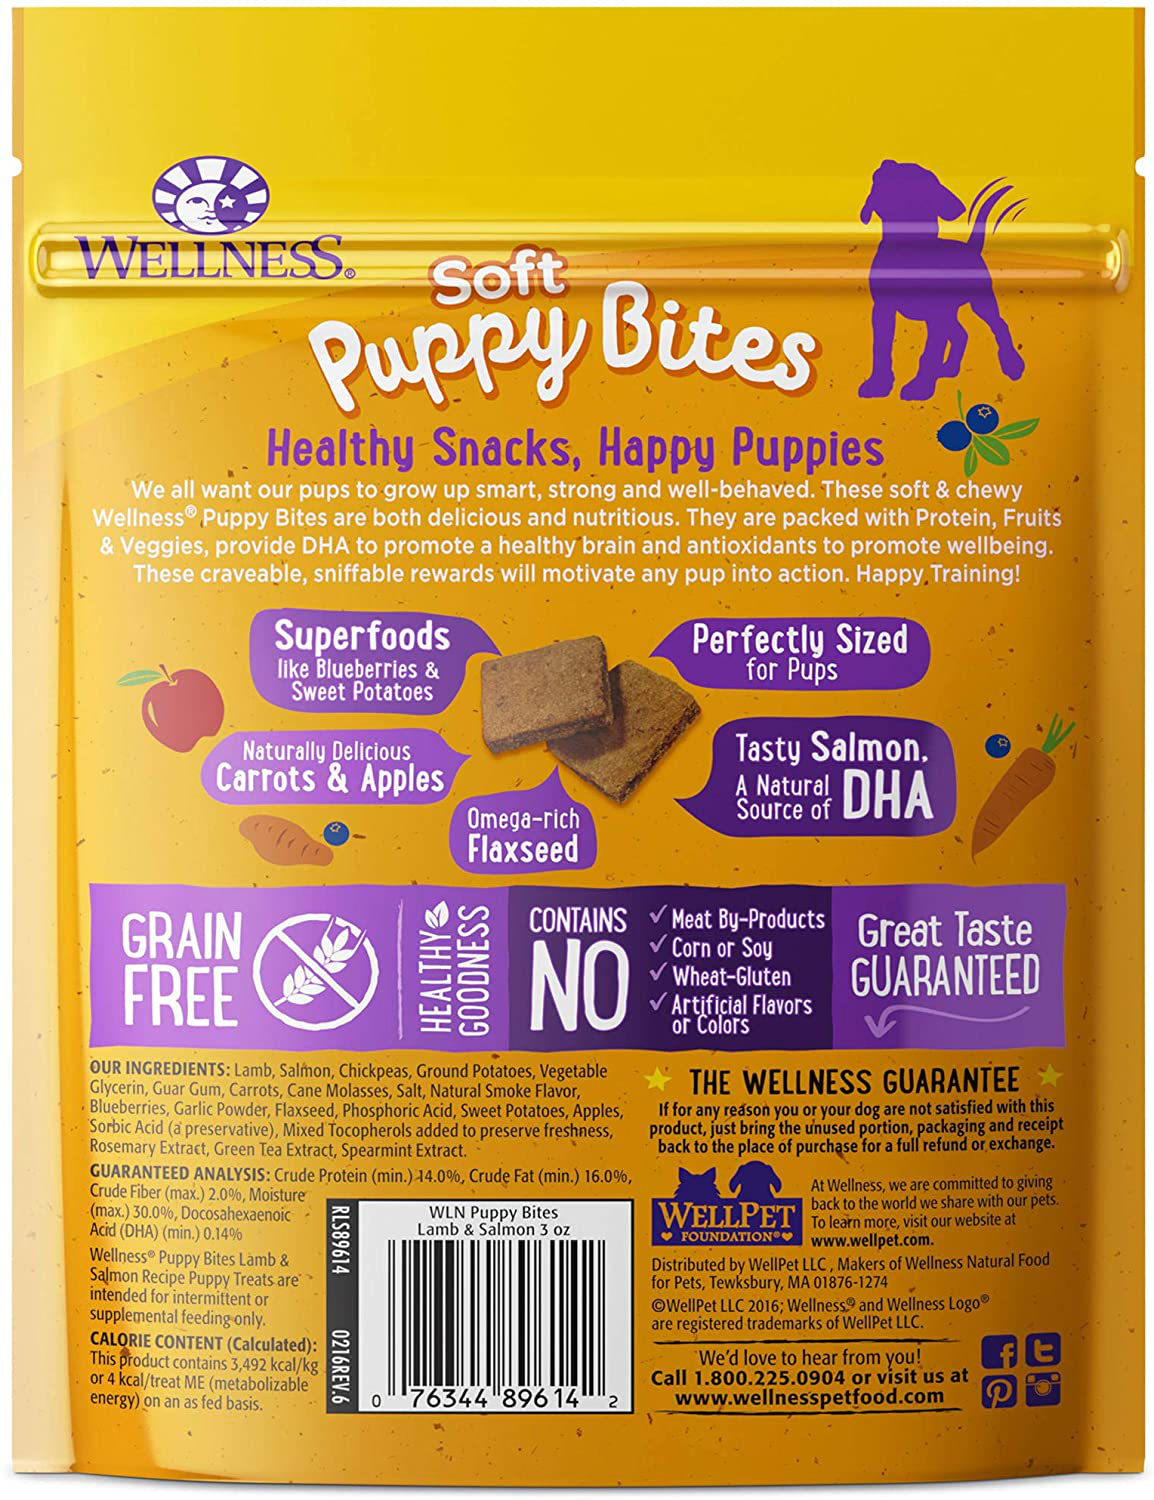 Wellness Natural Pet Food Grain-Free Crunchy Puppy Bites Treats